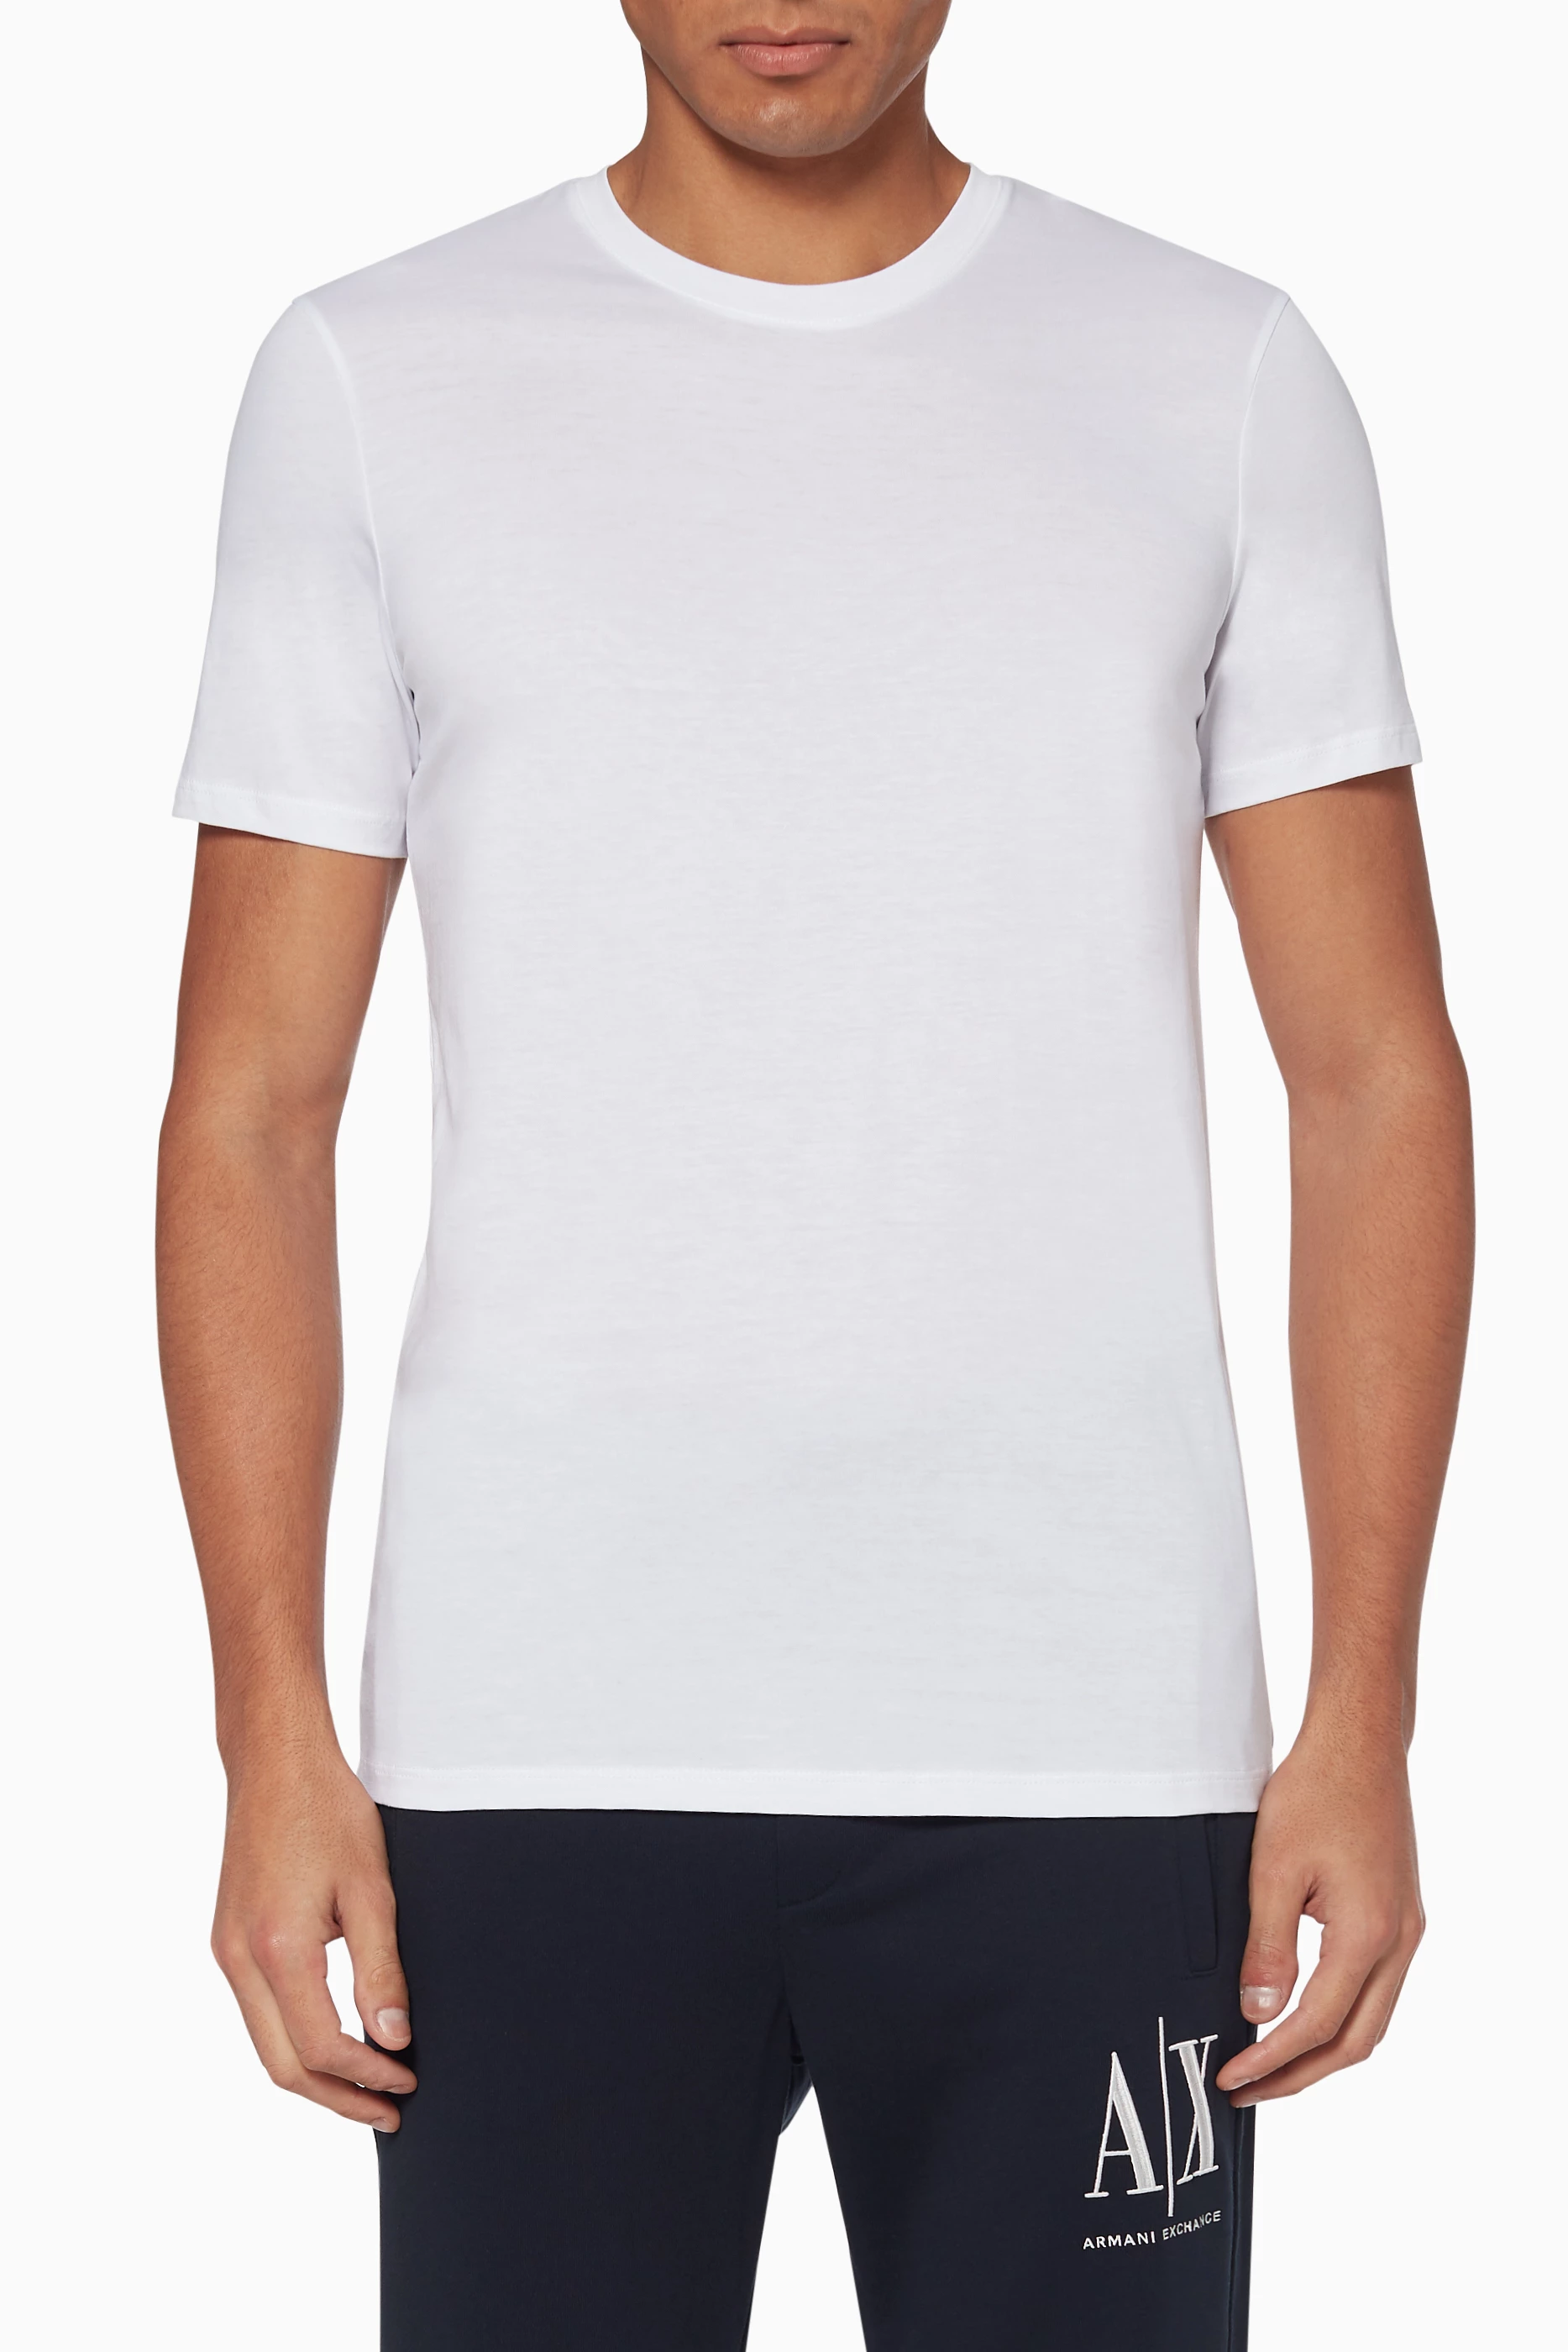 Shop Armani Exchange White Pima Cotton Crewneck T-Shirt for MEN | Ounass Saudi  Arabia